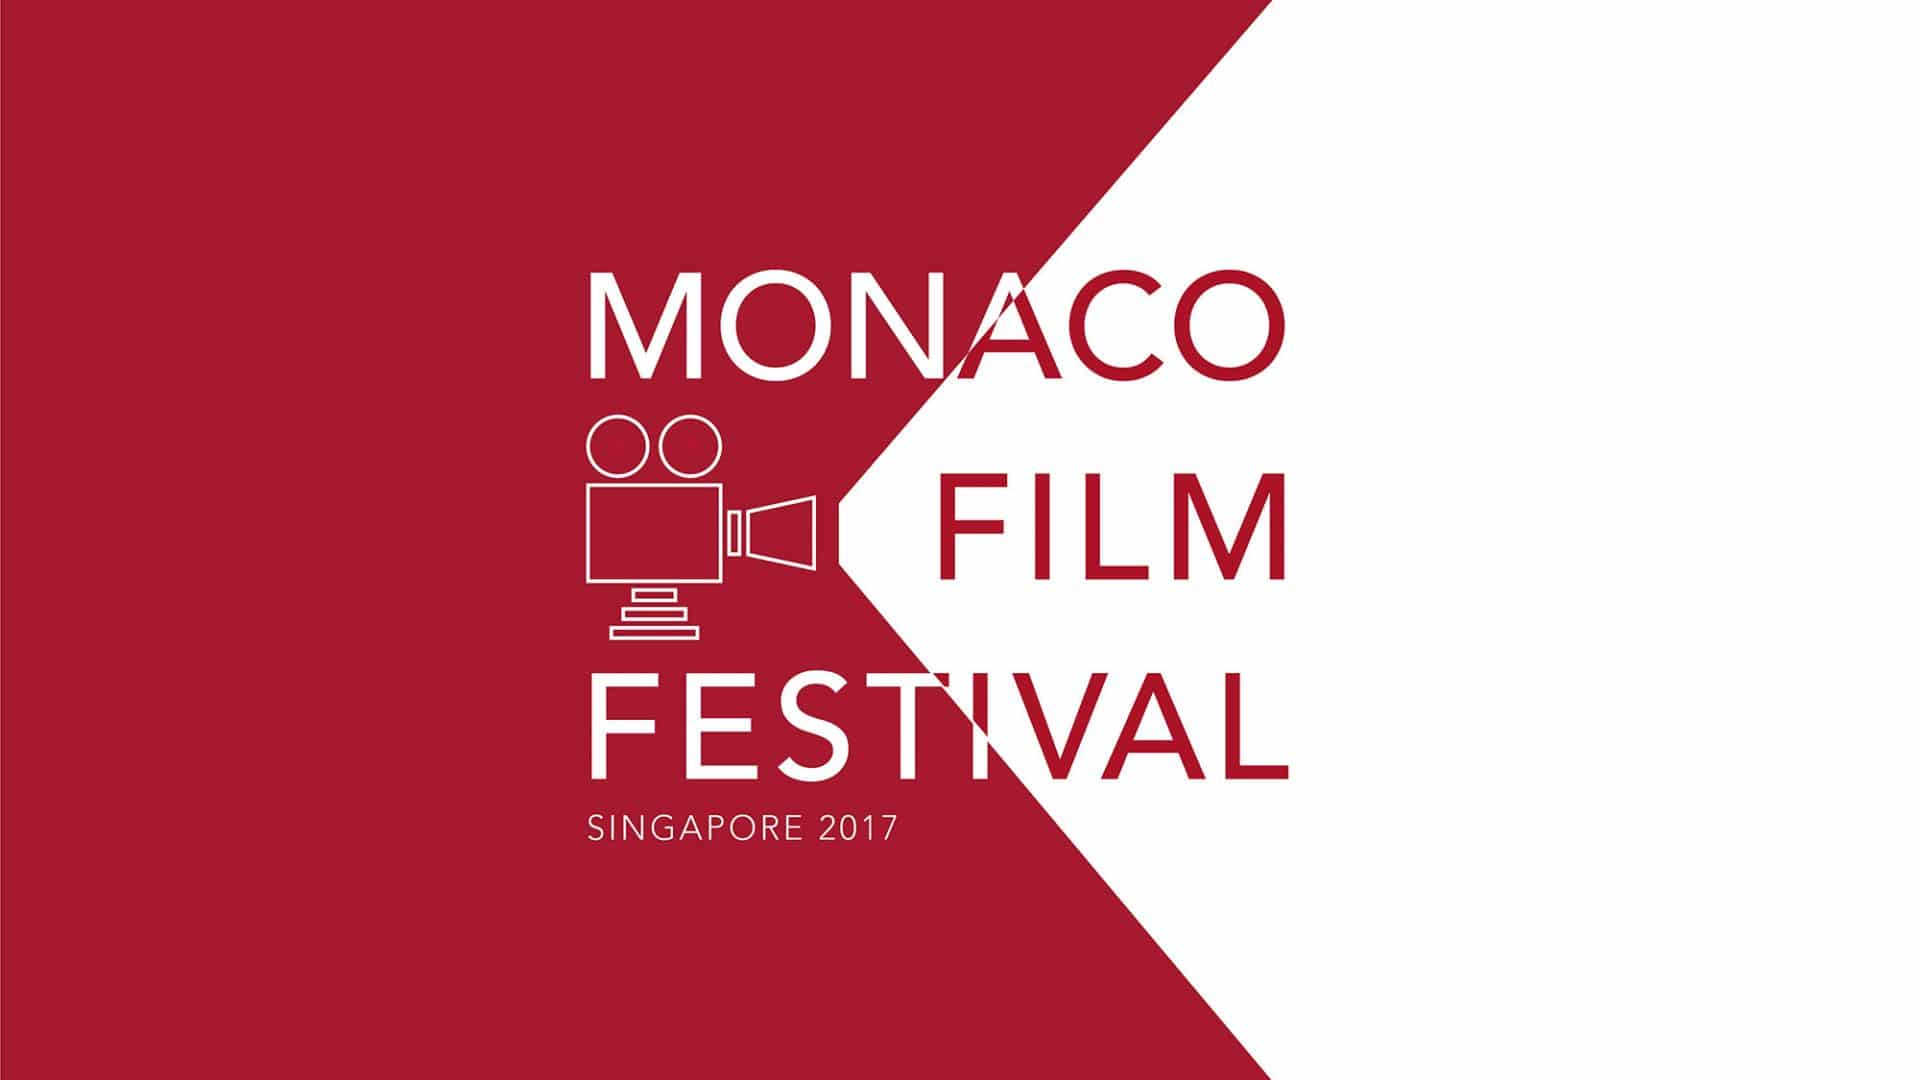 Monaco Film Festival Singapore